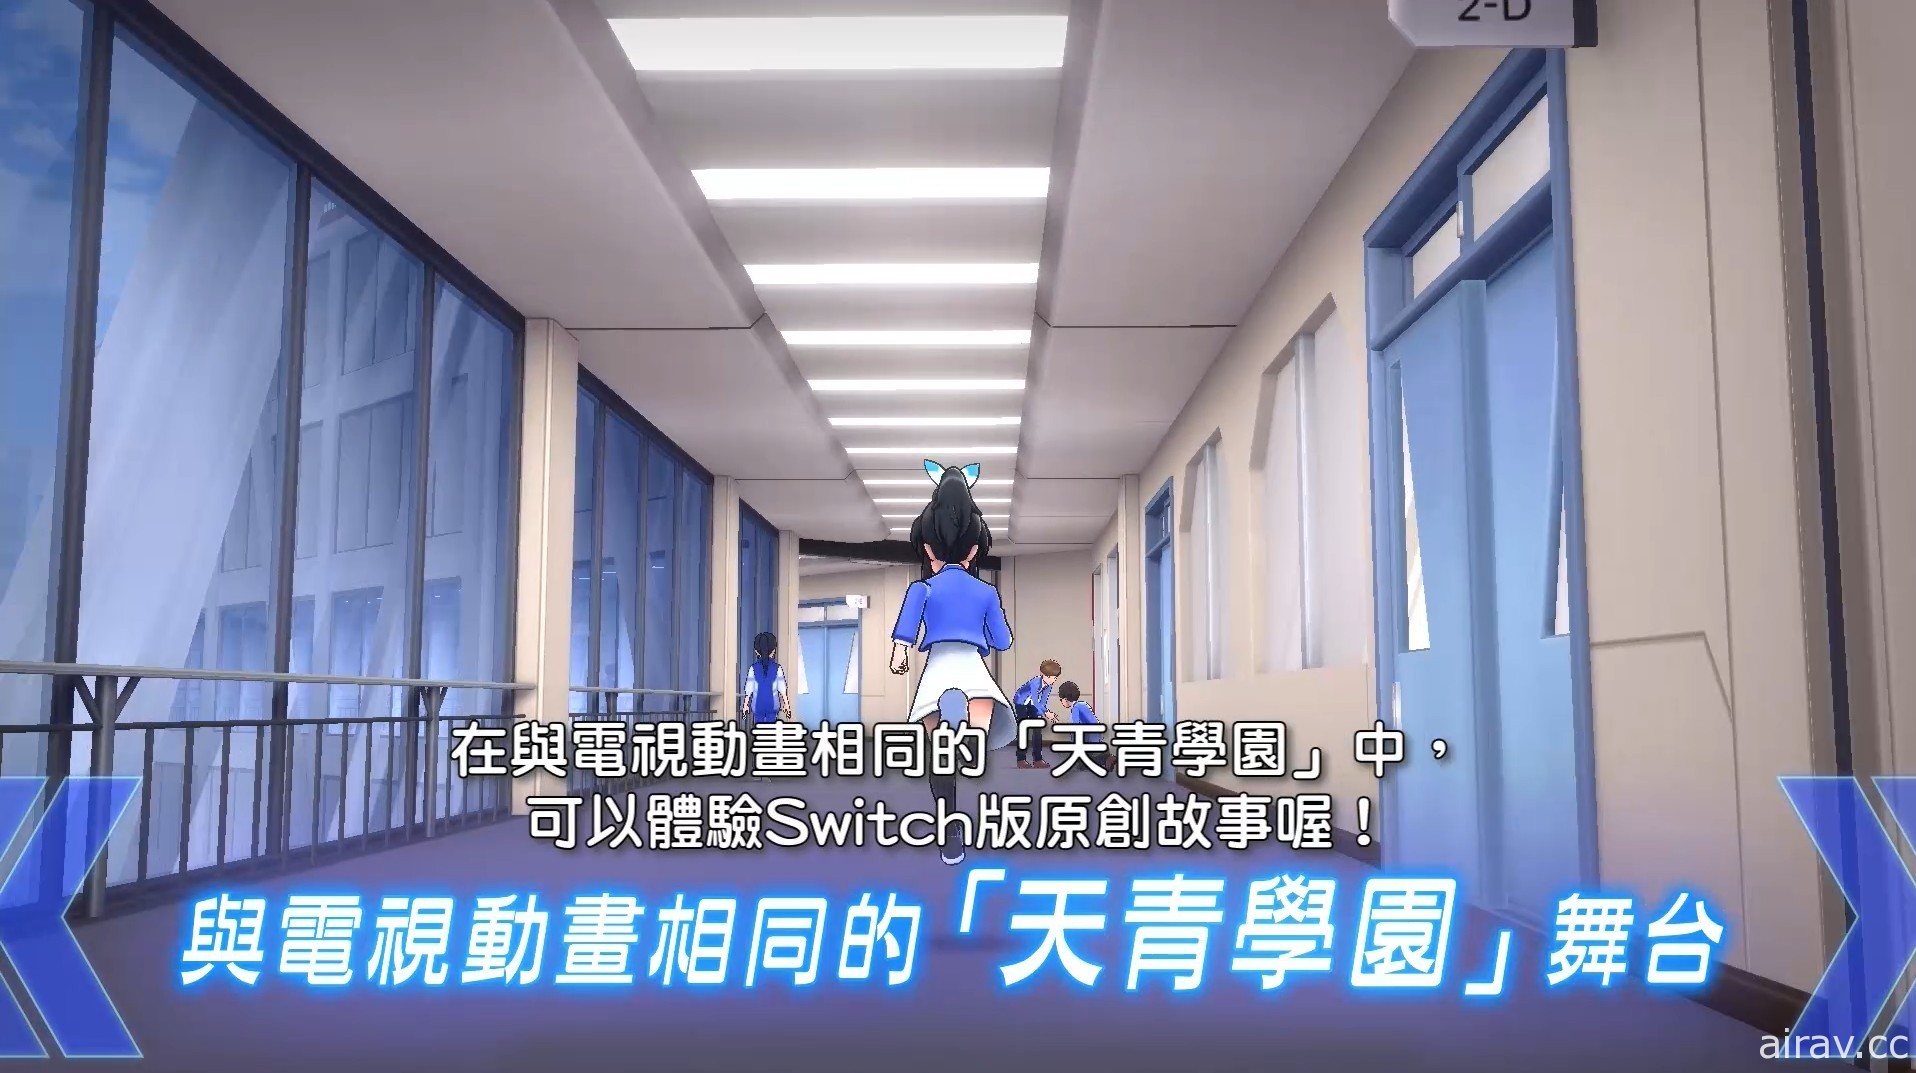 Switch 卡片对战 RPG《闇影诗章‧霸者之战》中文版 12 月 3 日发售